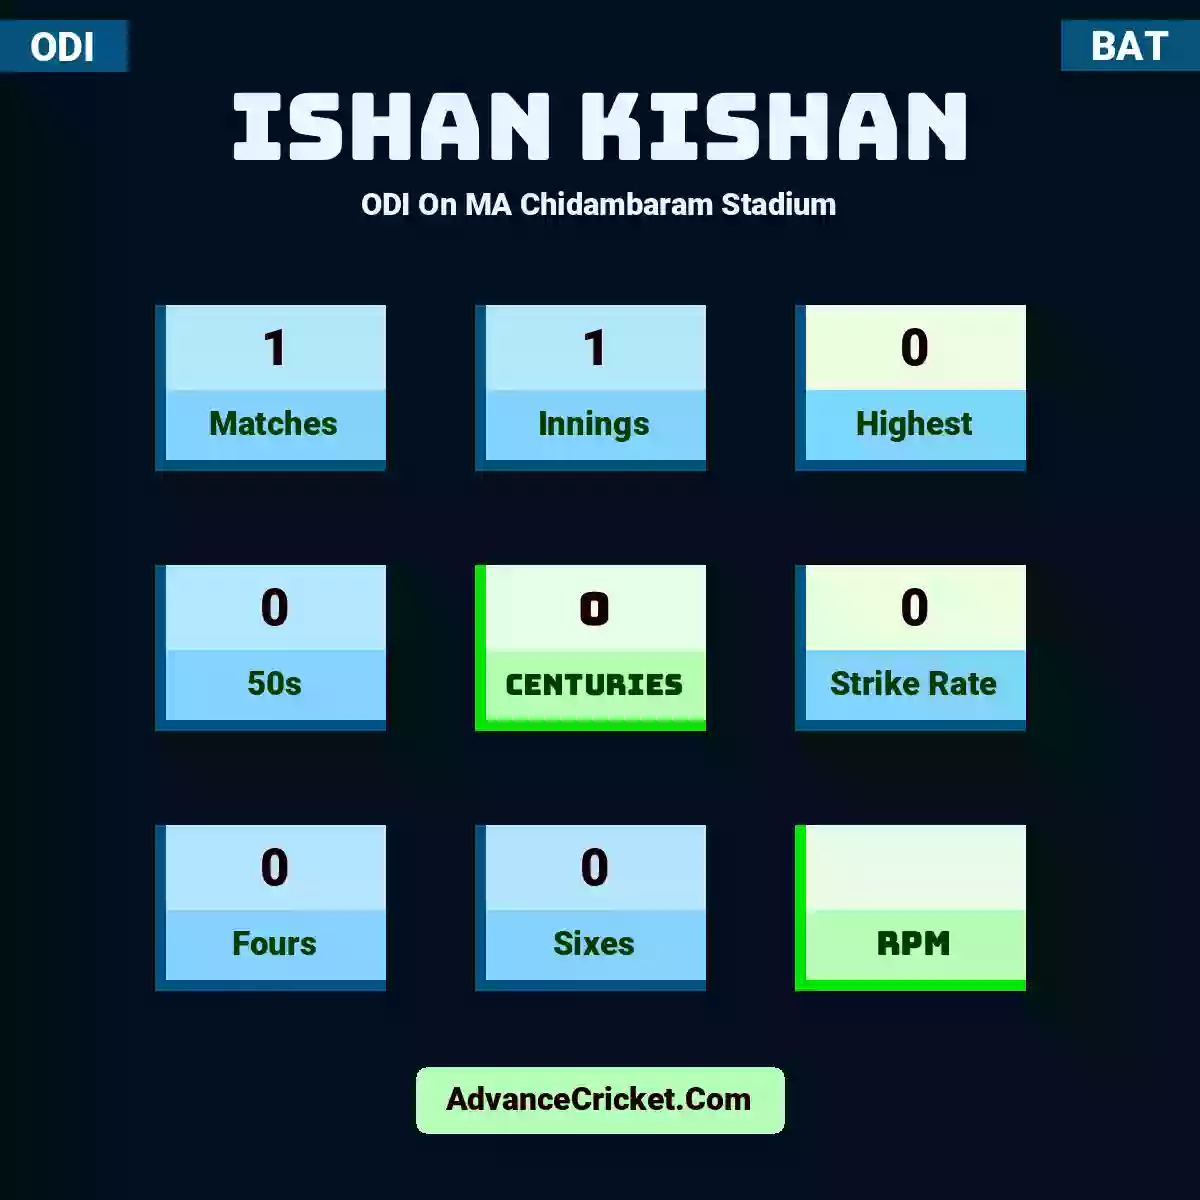 Ishan Kishan ODI  On MA Chidambaram Stadium, Ishan Kishan played 1 matches, scored 0 runs as highest, 0 half-centuries, and 0 centuries, with a strike rate of 0. I.Kishan hit 0 fours and 0 sixes.